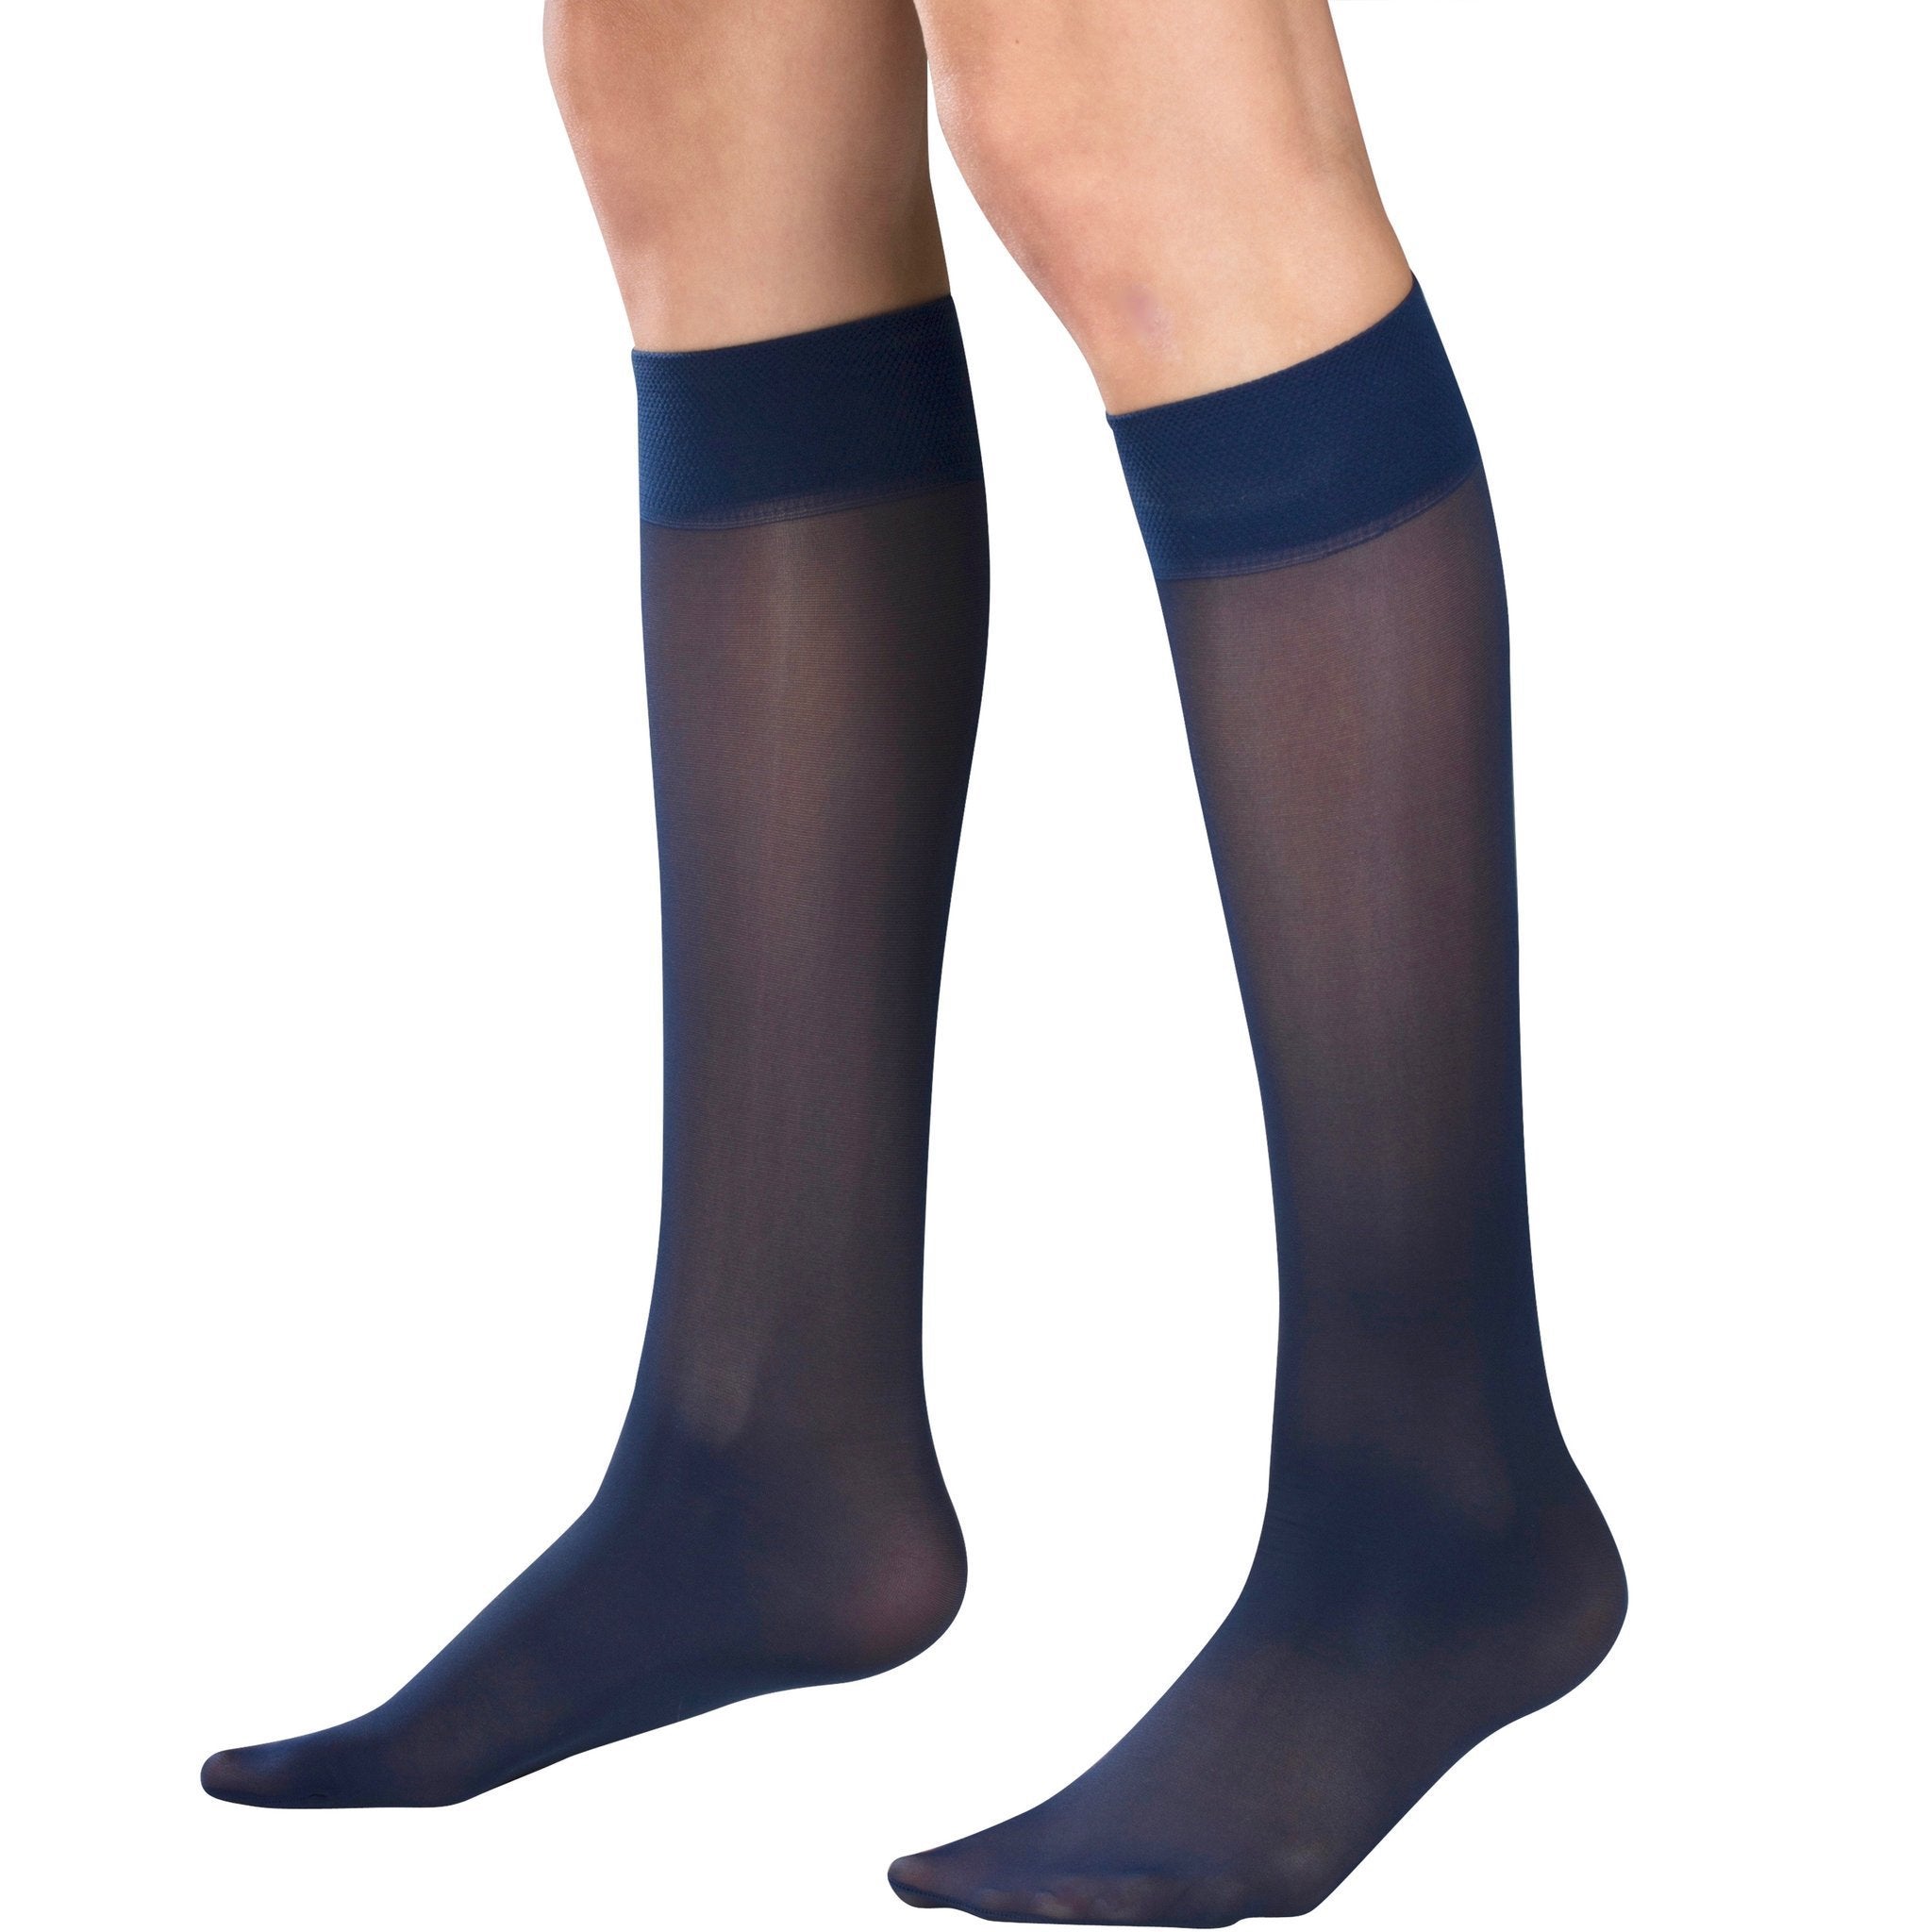 Jobst Ultra Sheer Knee High Support Stockings 8-15 Mm/Hg Beige - Small 